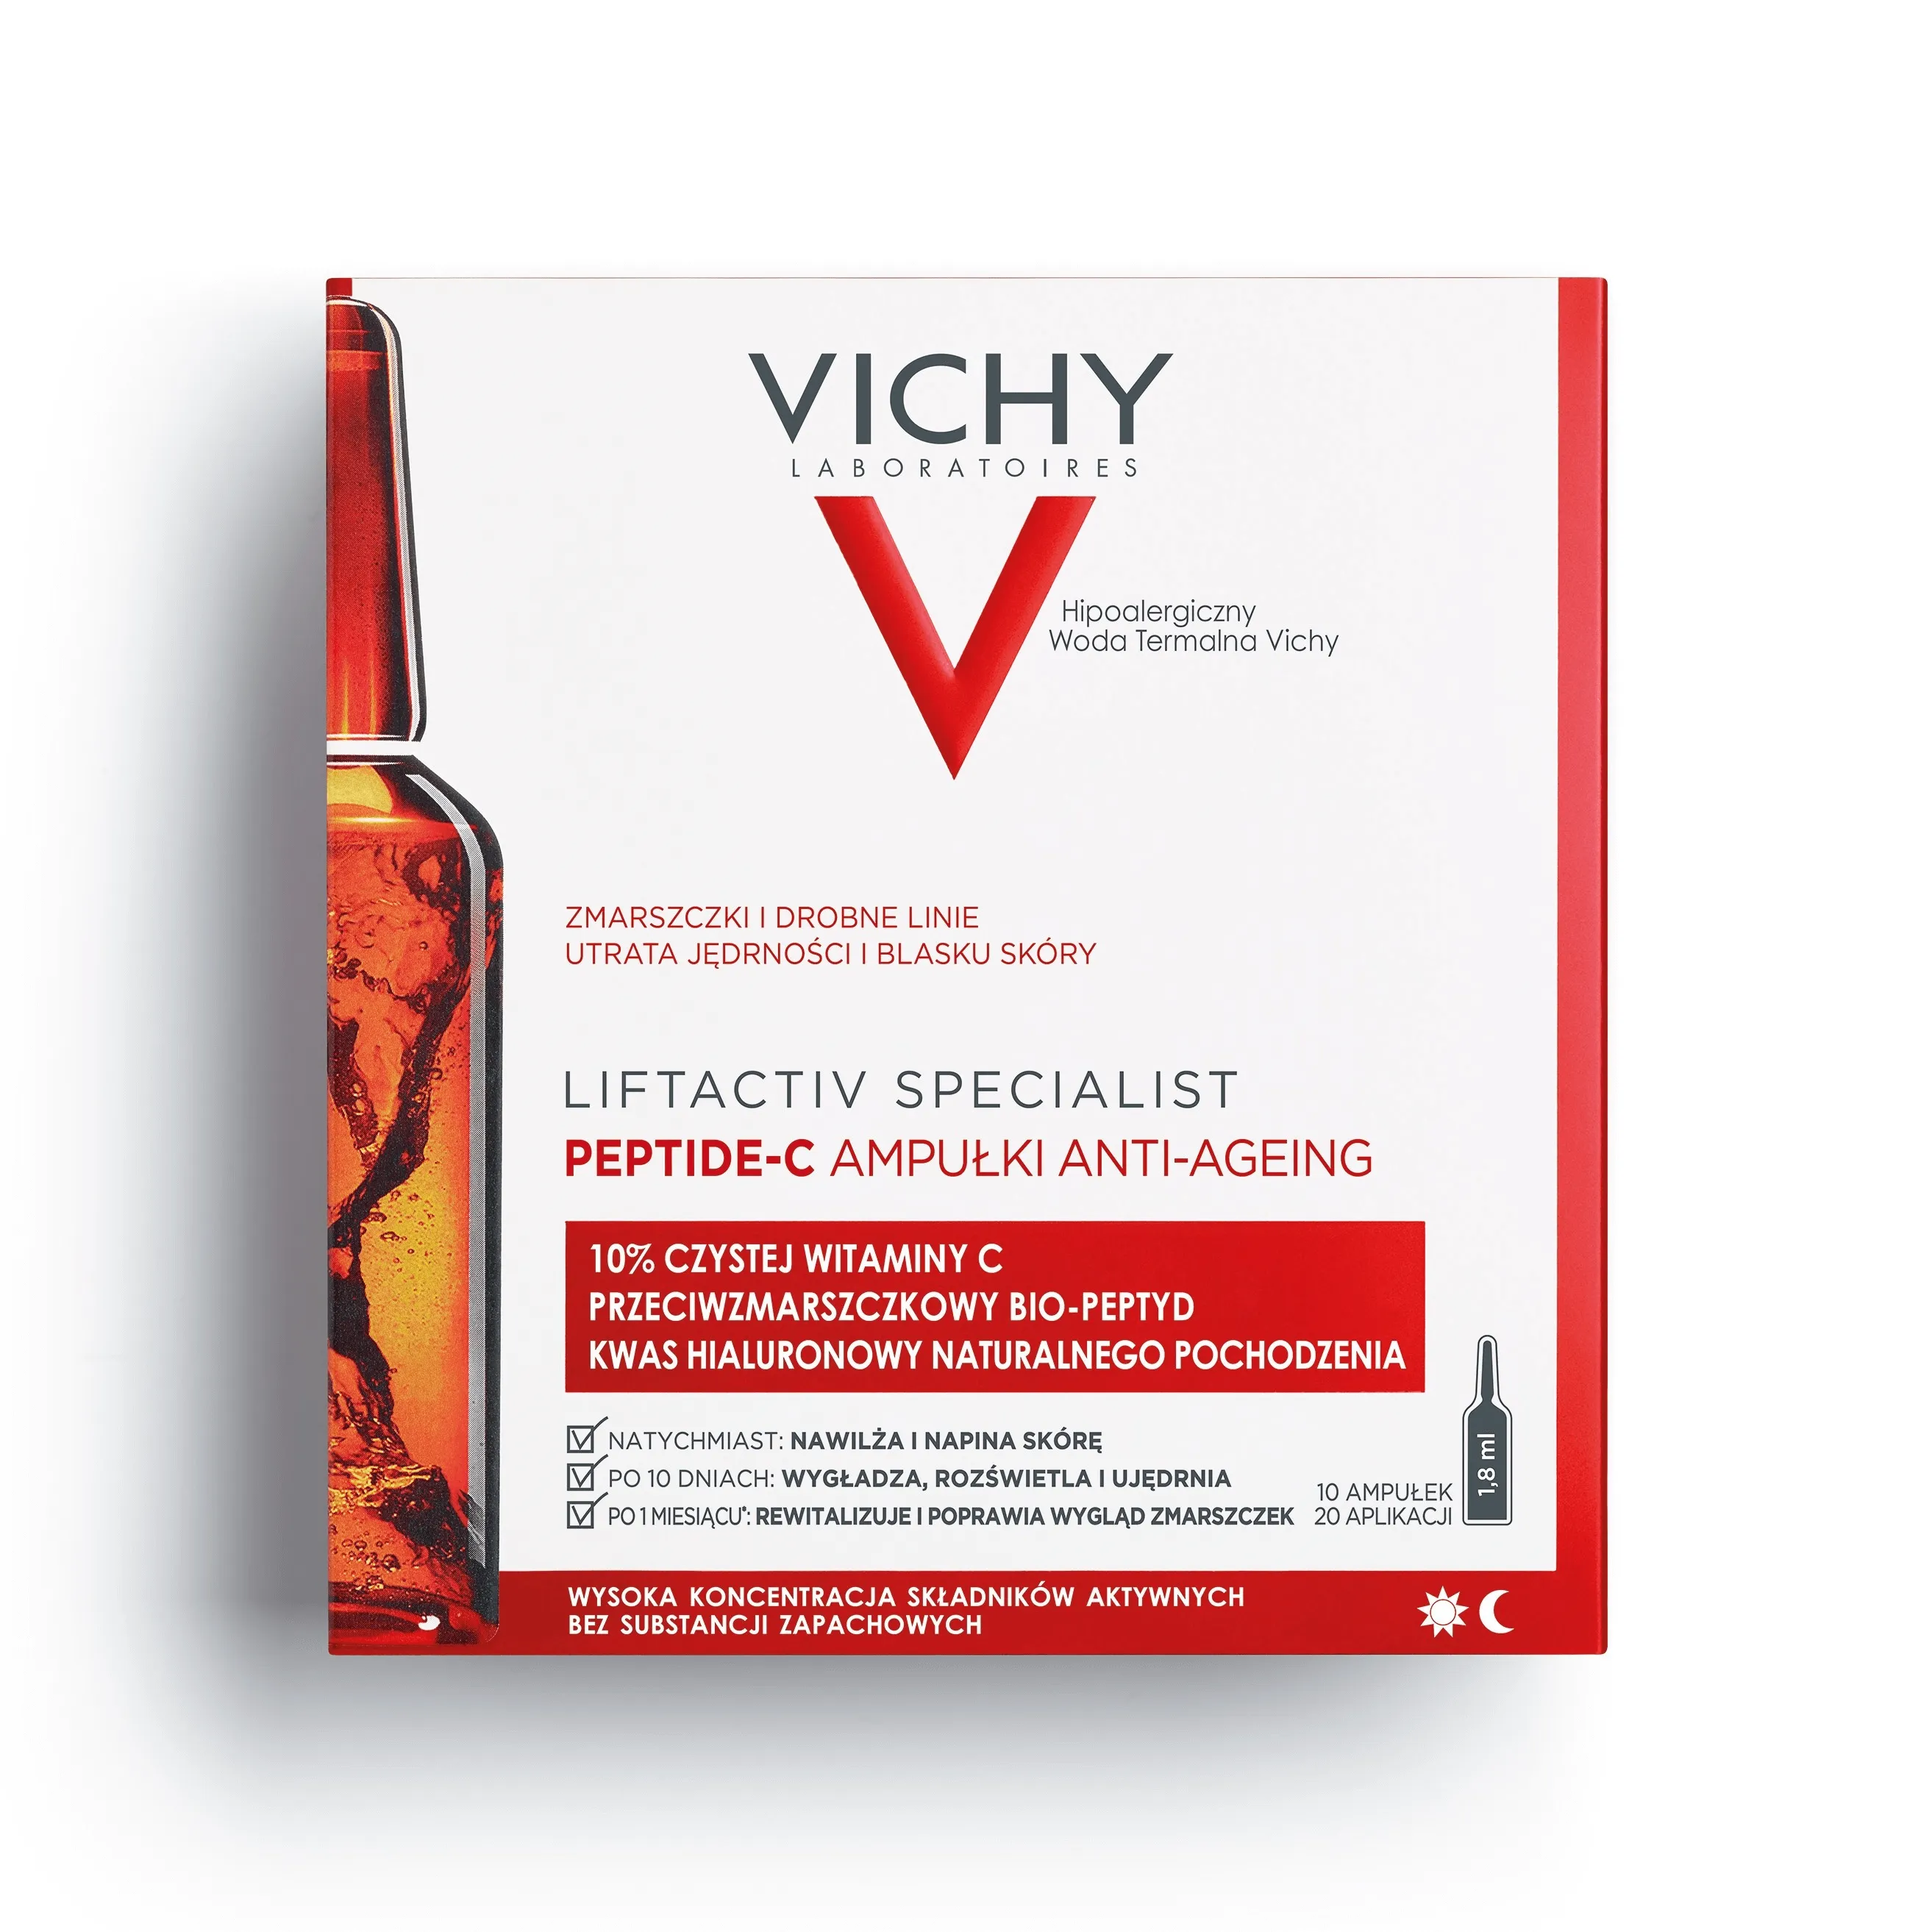 Vichy Liftactiv Specialist Peptide-C, kuracja Anti-Ageing, 10 ampułek x 1,8 ml